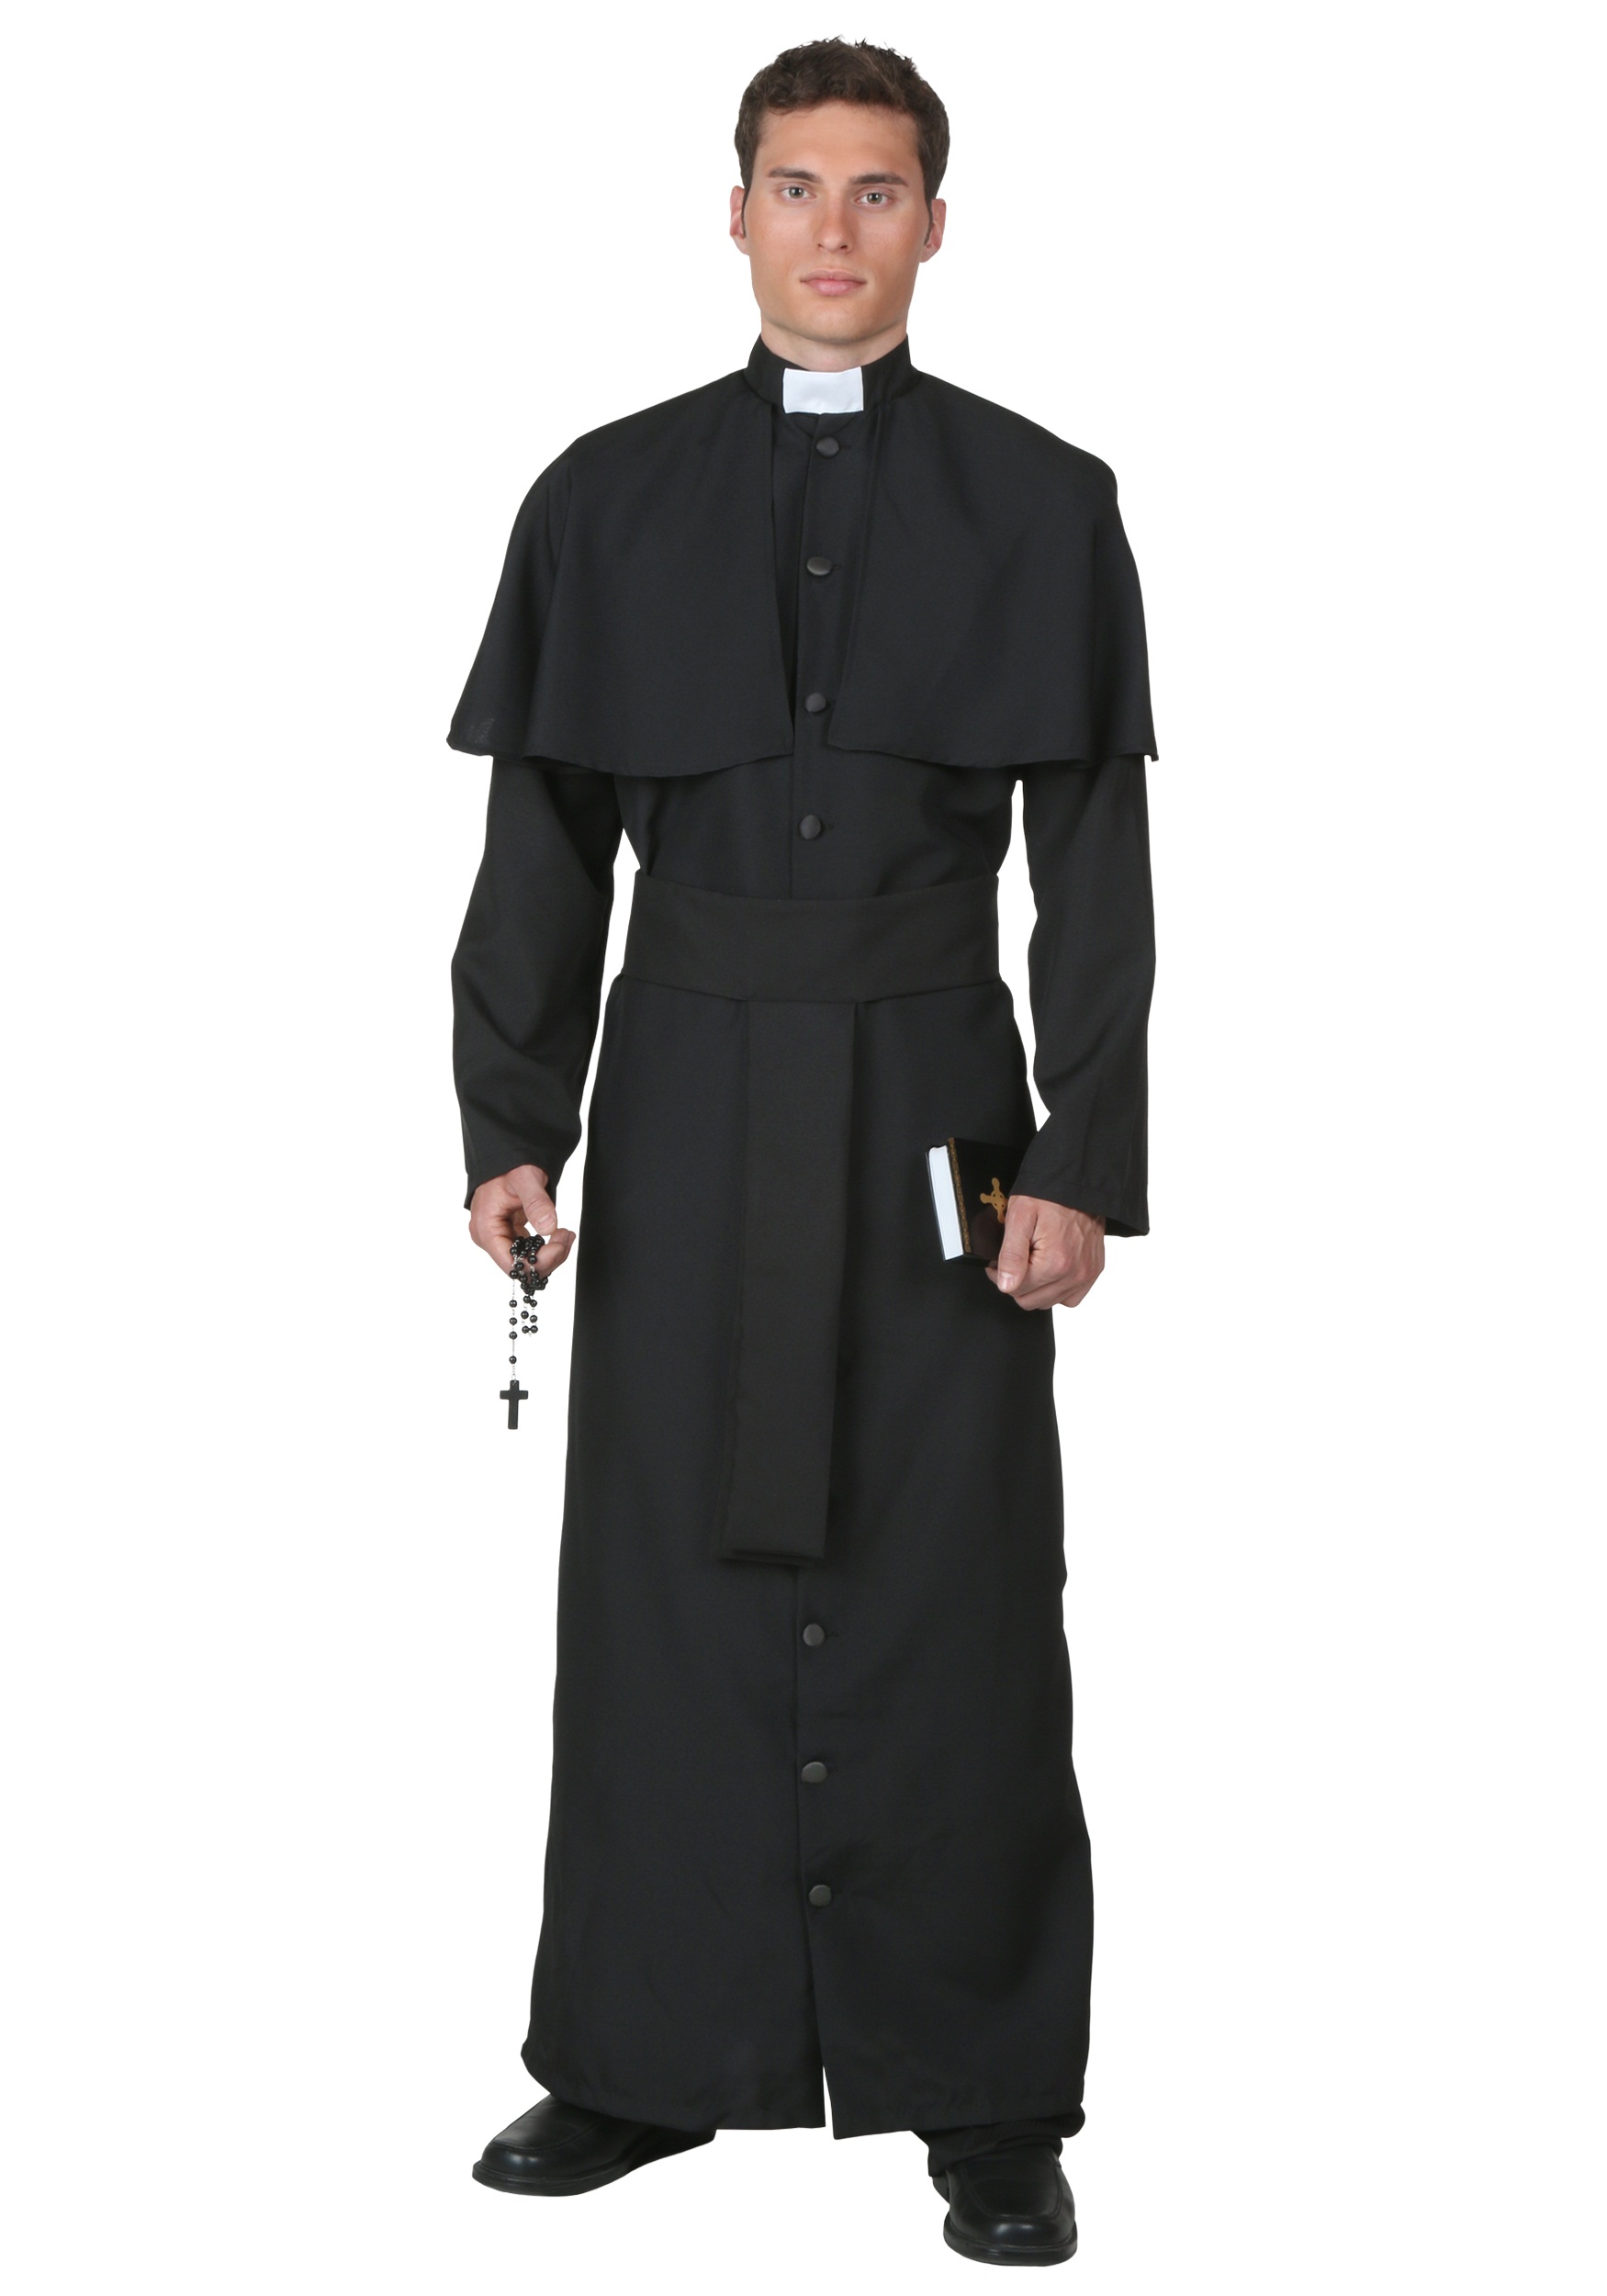 deluxe-priest-costume.jpg